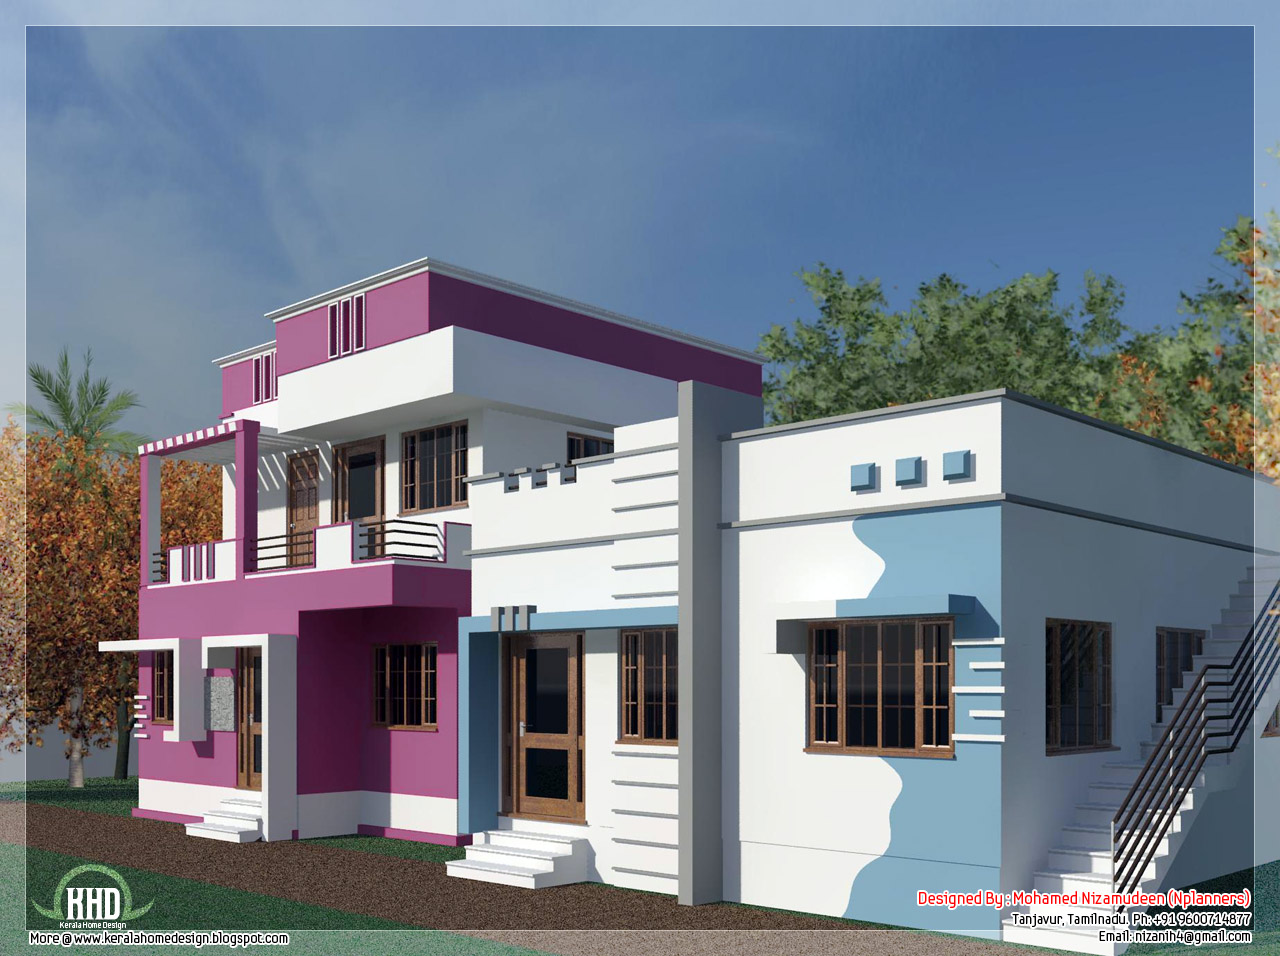 Tamilnadu model home desgin in 3000 sq feet Home Sweet Home